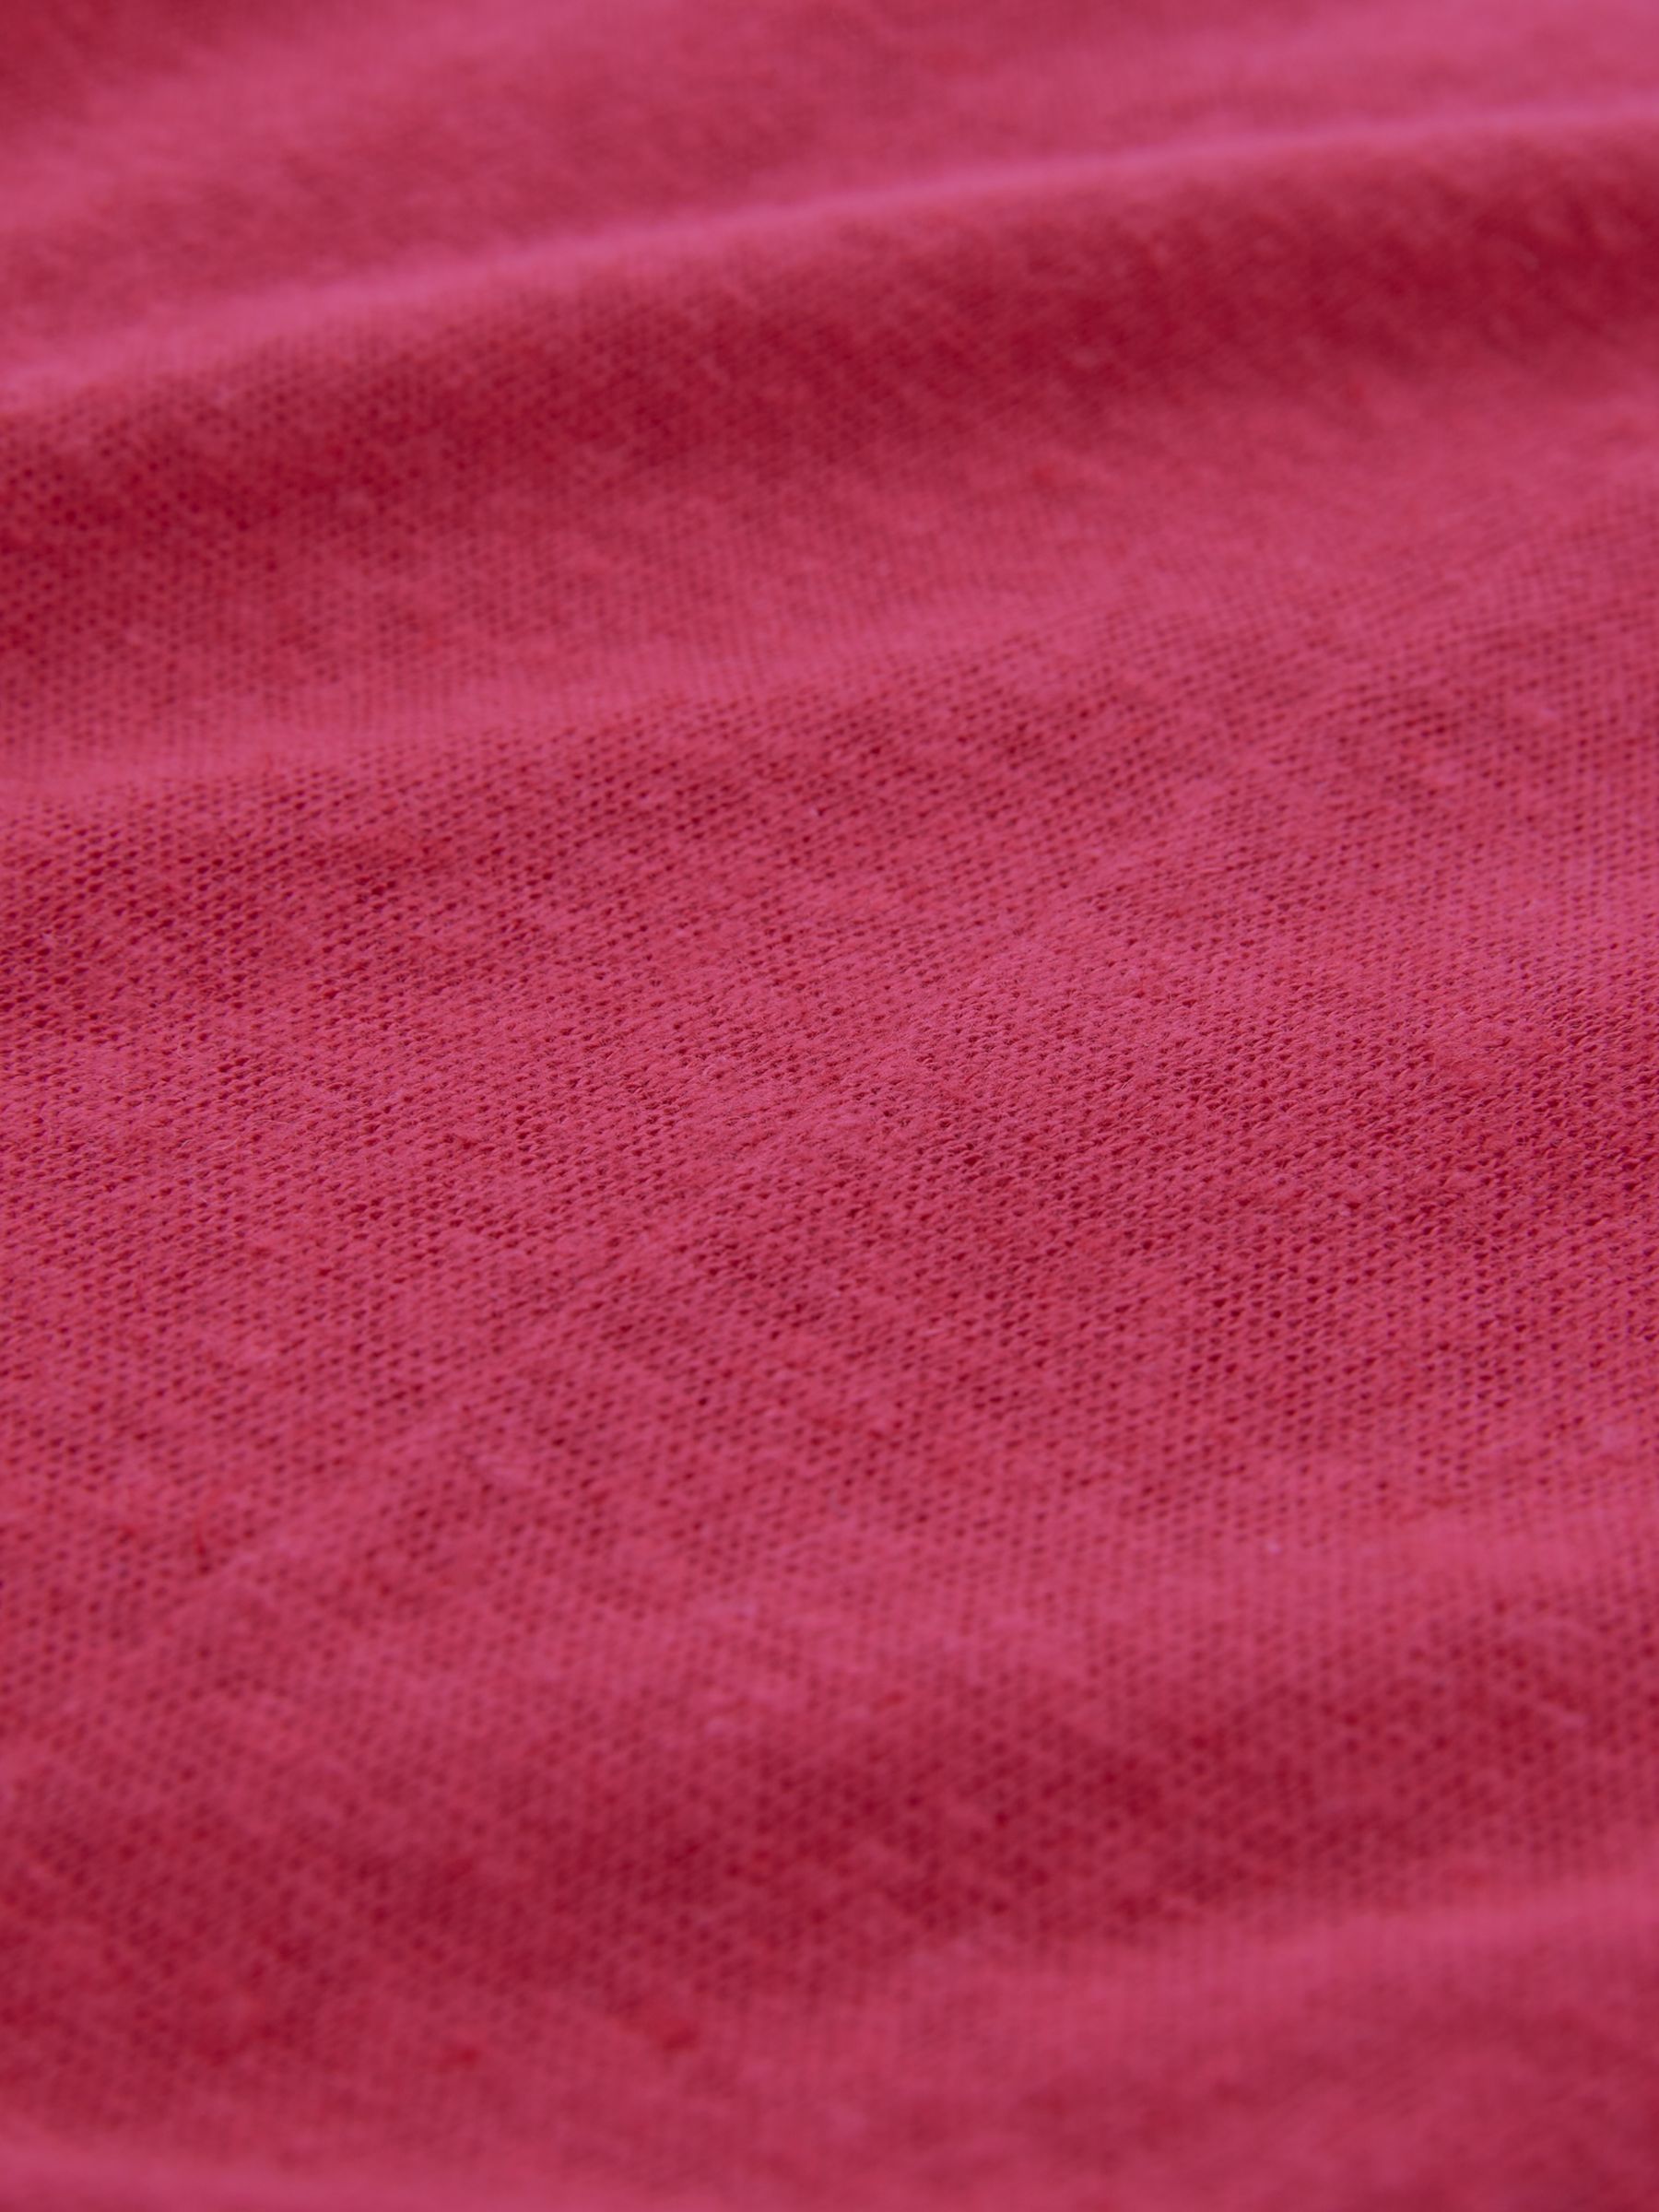 Celtic & Co. Linen And Cotton Button Back Midi Dress, Raspberry, 8